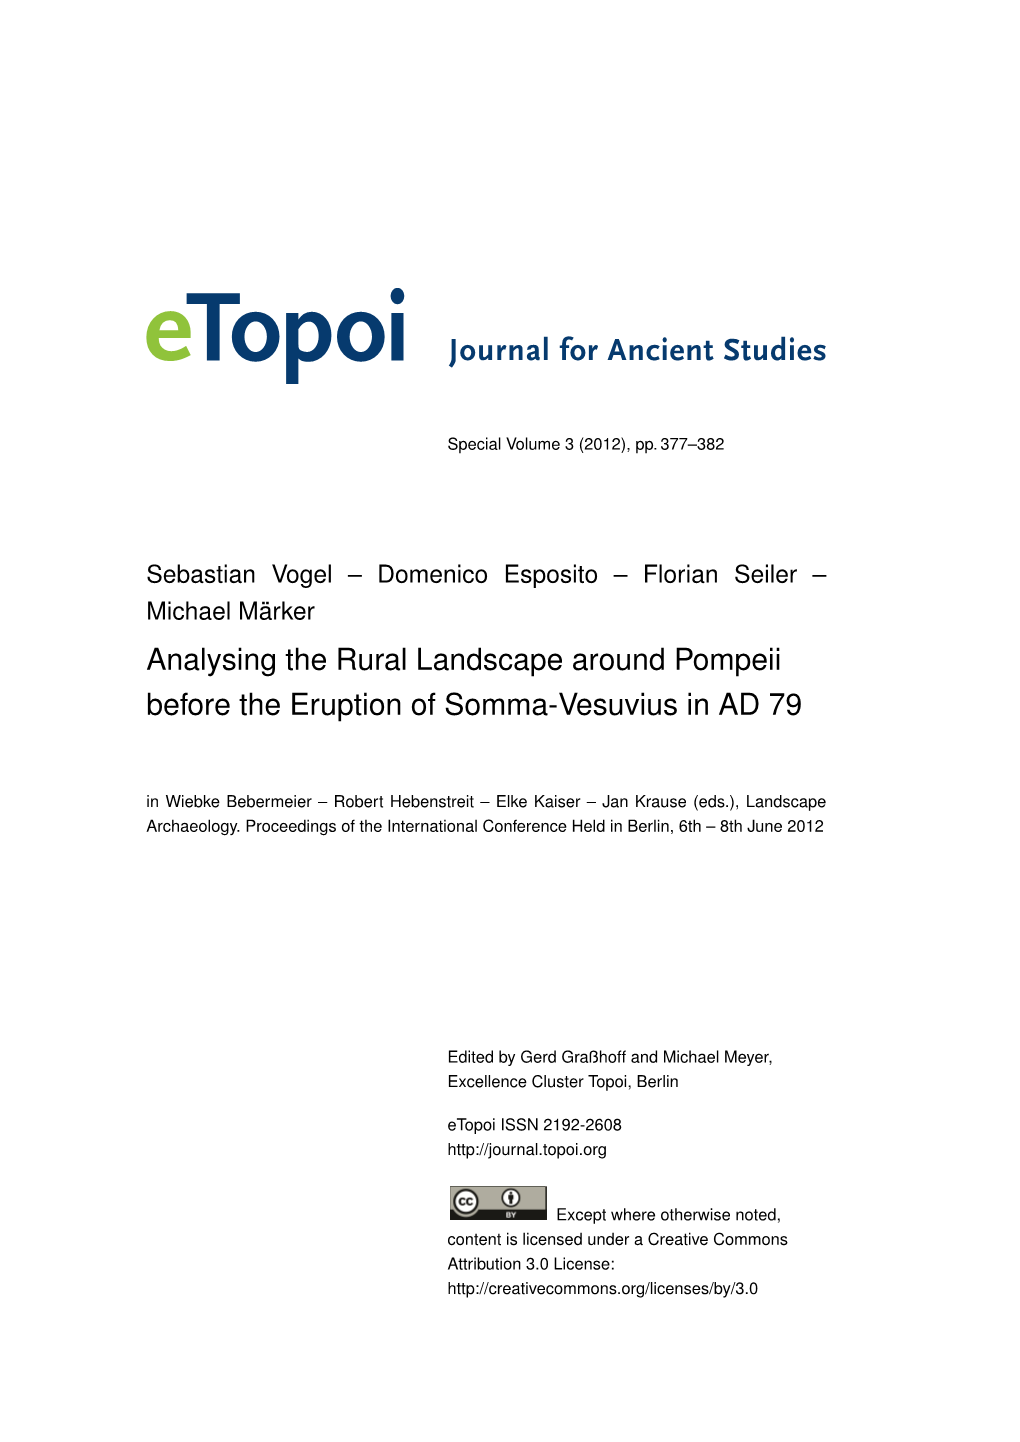 Analysing the Rural Landscape Around Pompeii Before the Eruption of Somma-Vesuvius in AD 79